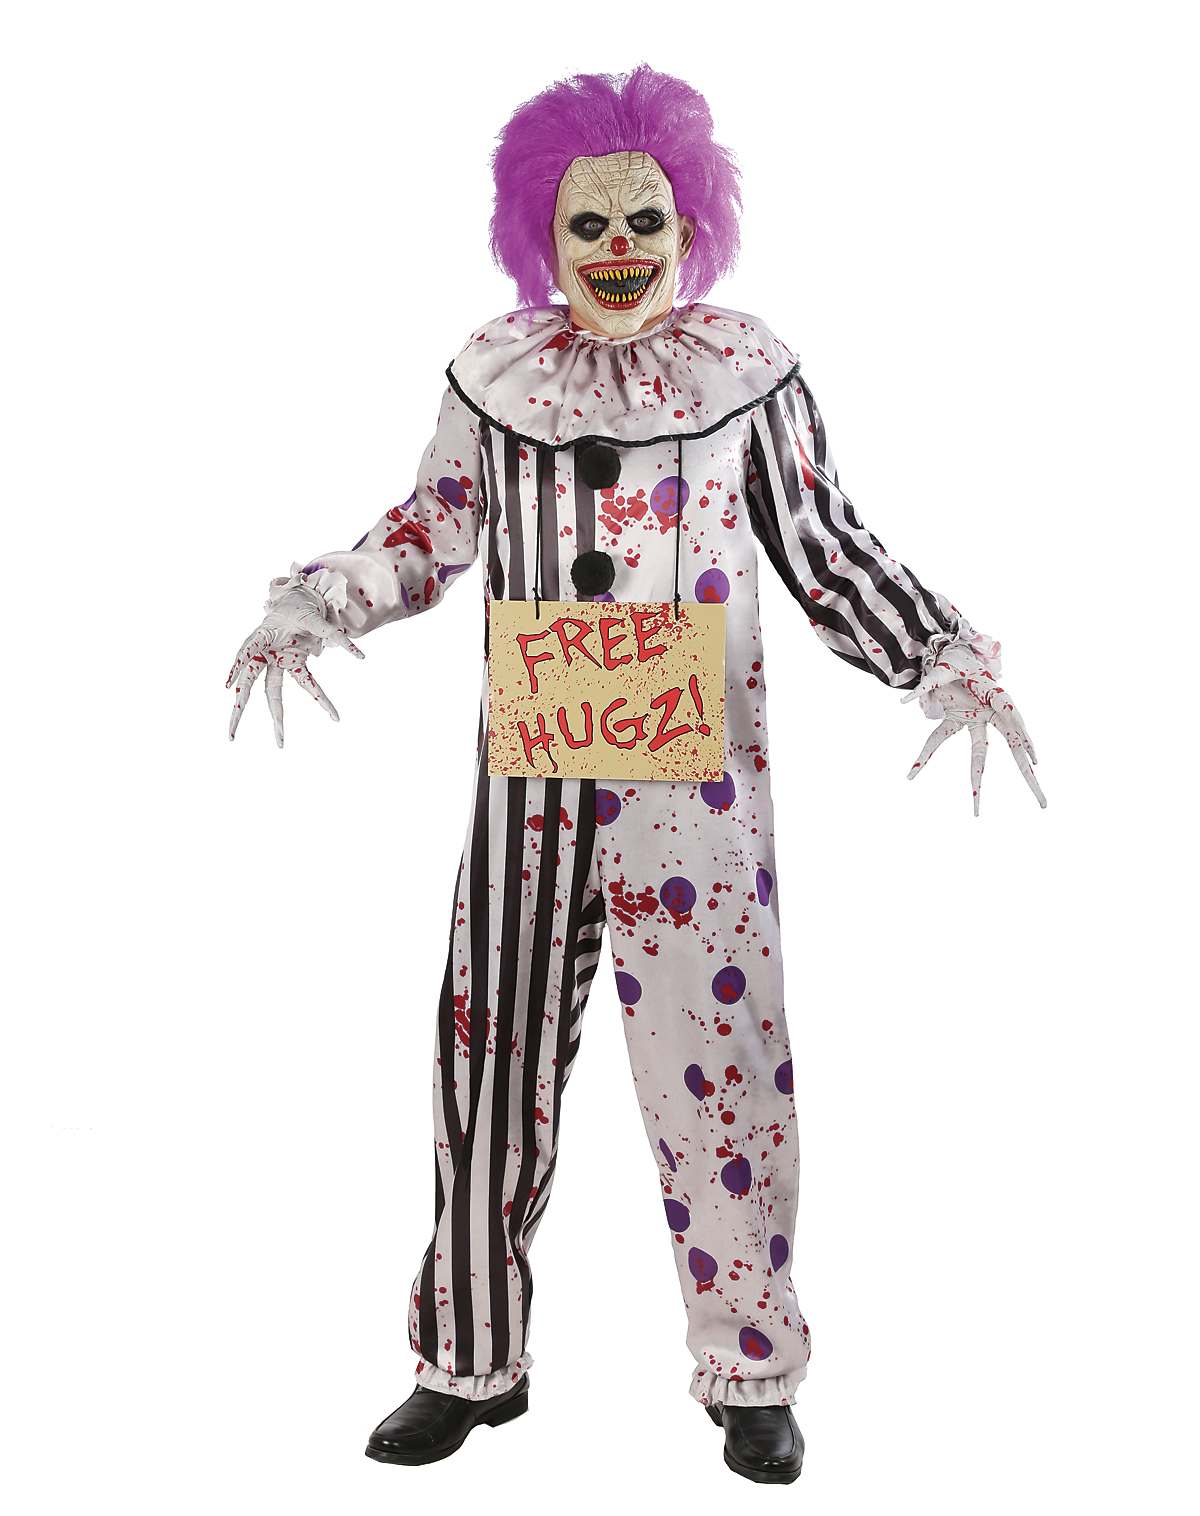 Adult Hugz the Clown costume